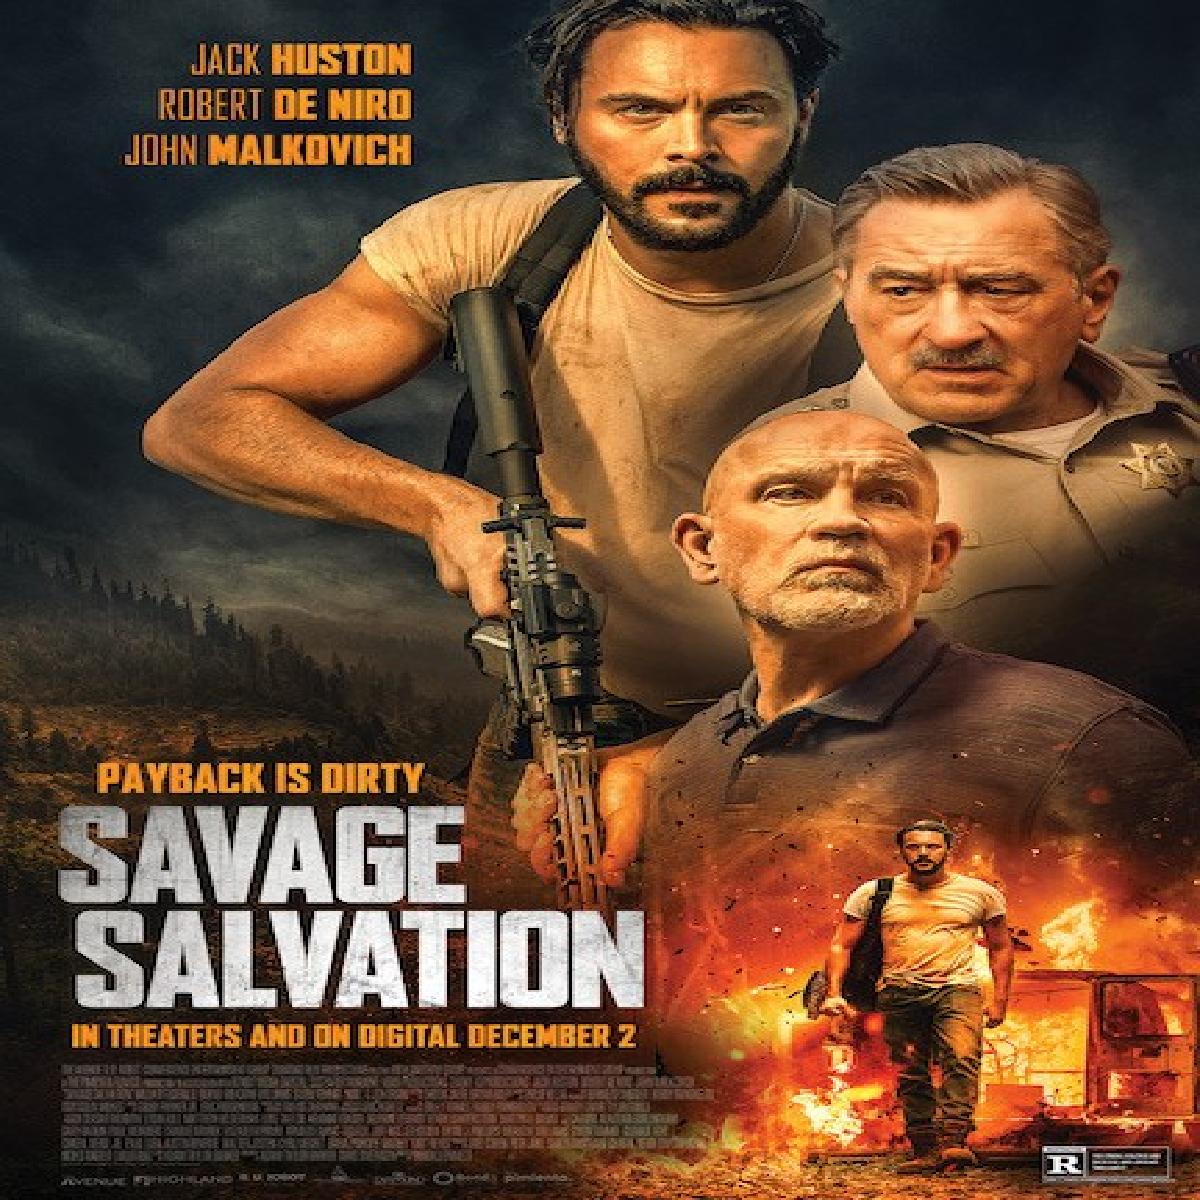 Robert DeNiro, John Malkovich And Jack Huston In Savage Salvation